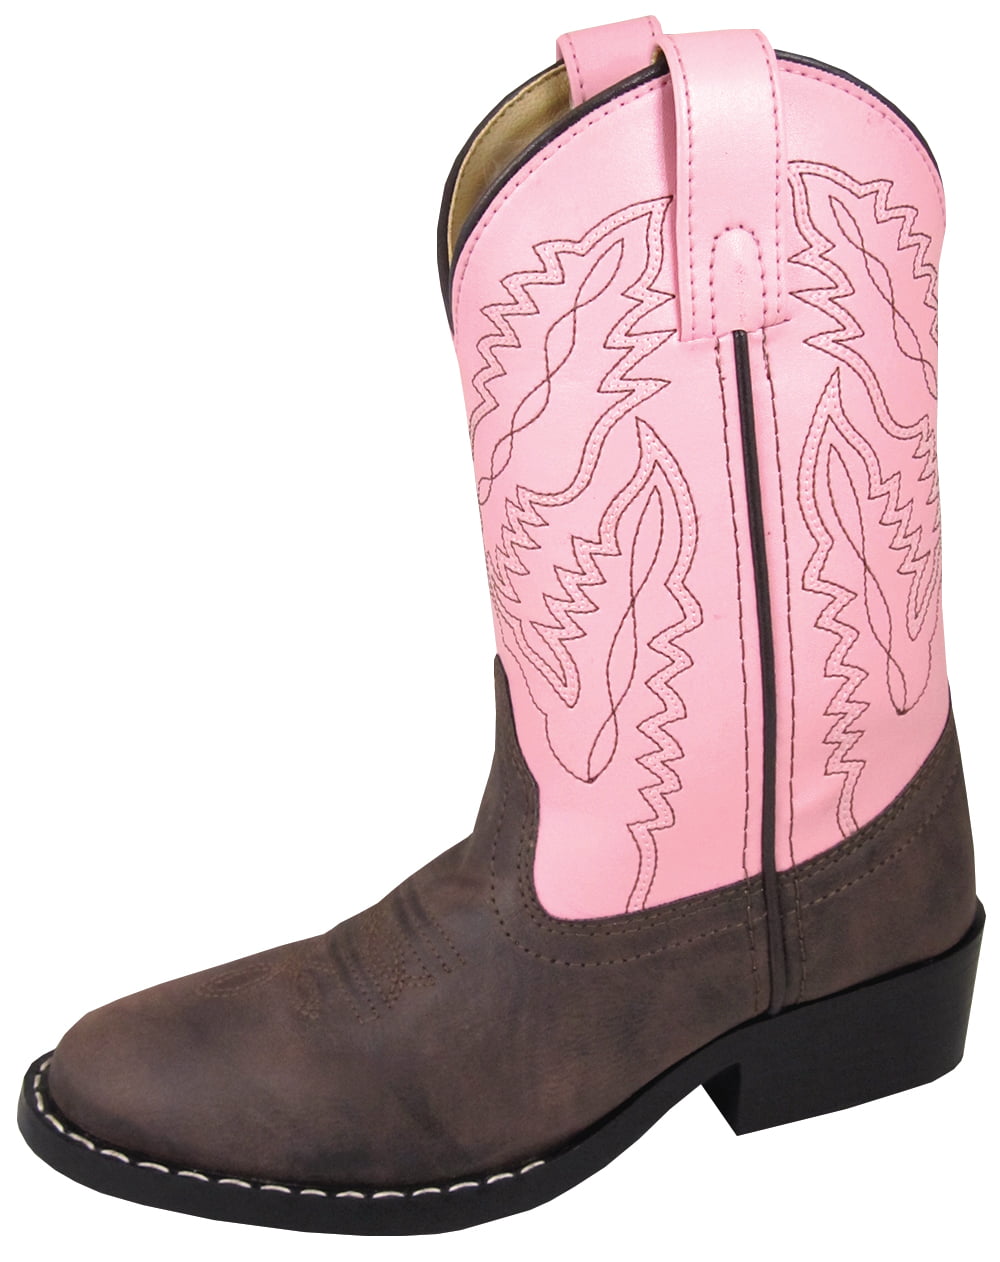 Smoky Mountain Childrens Girls Monterey Boots Brown/Pink